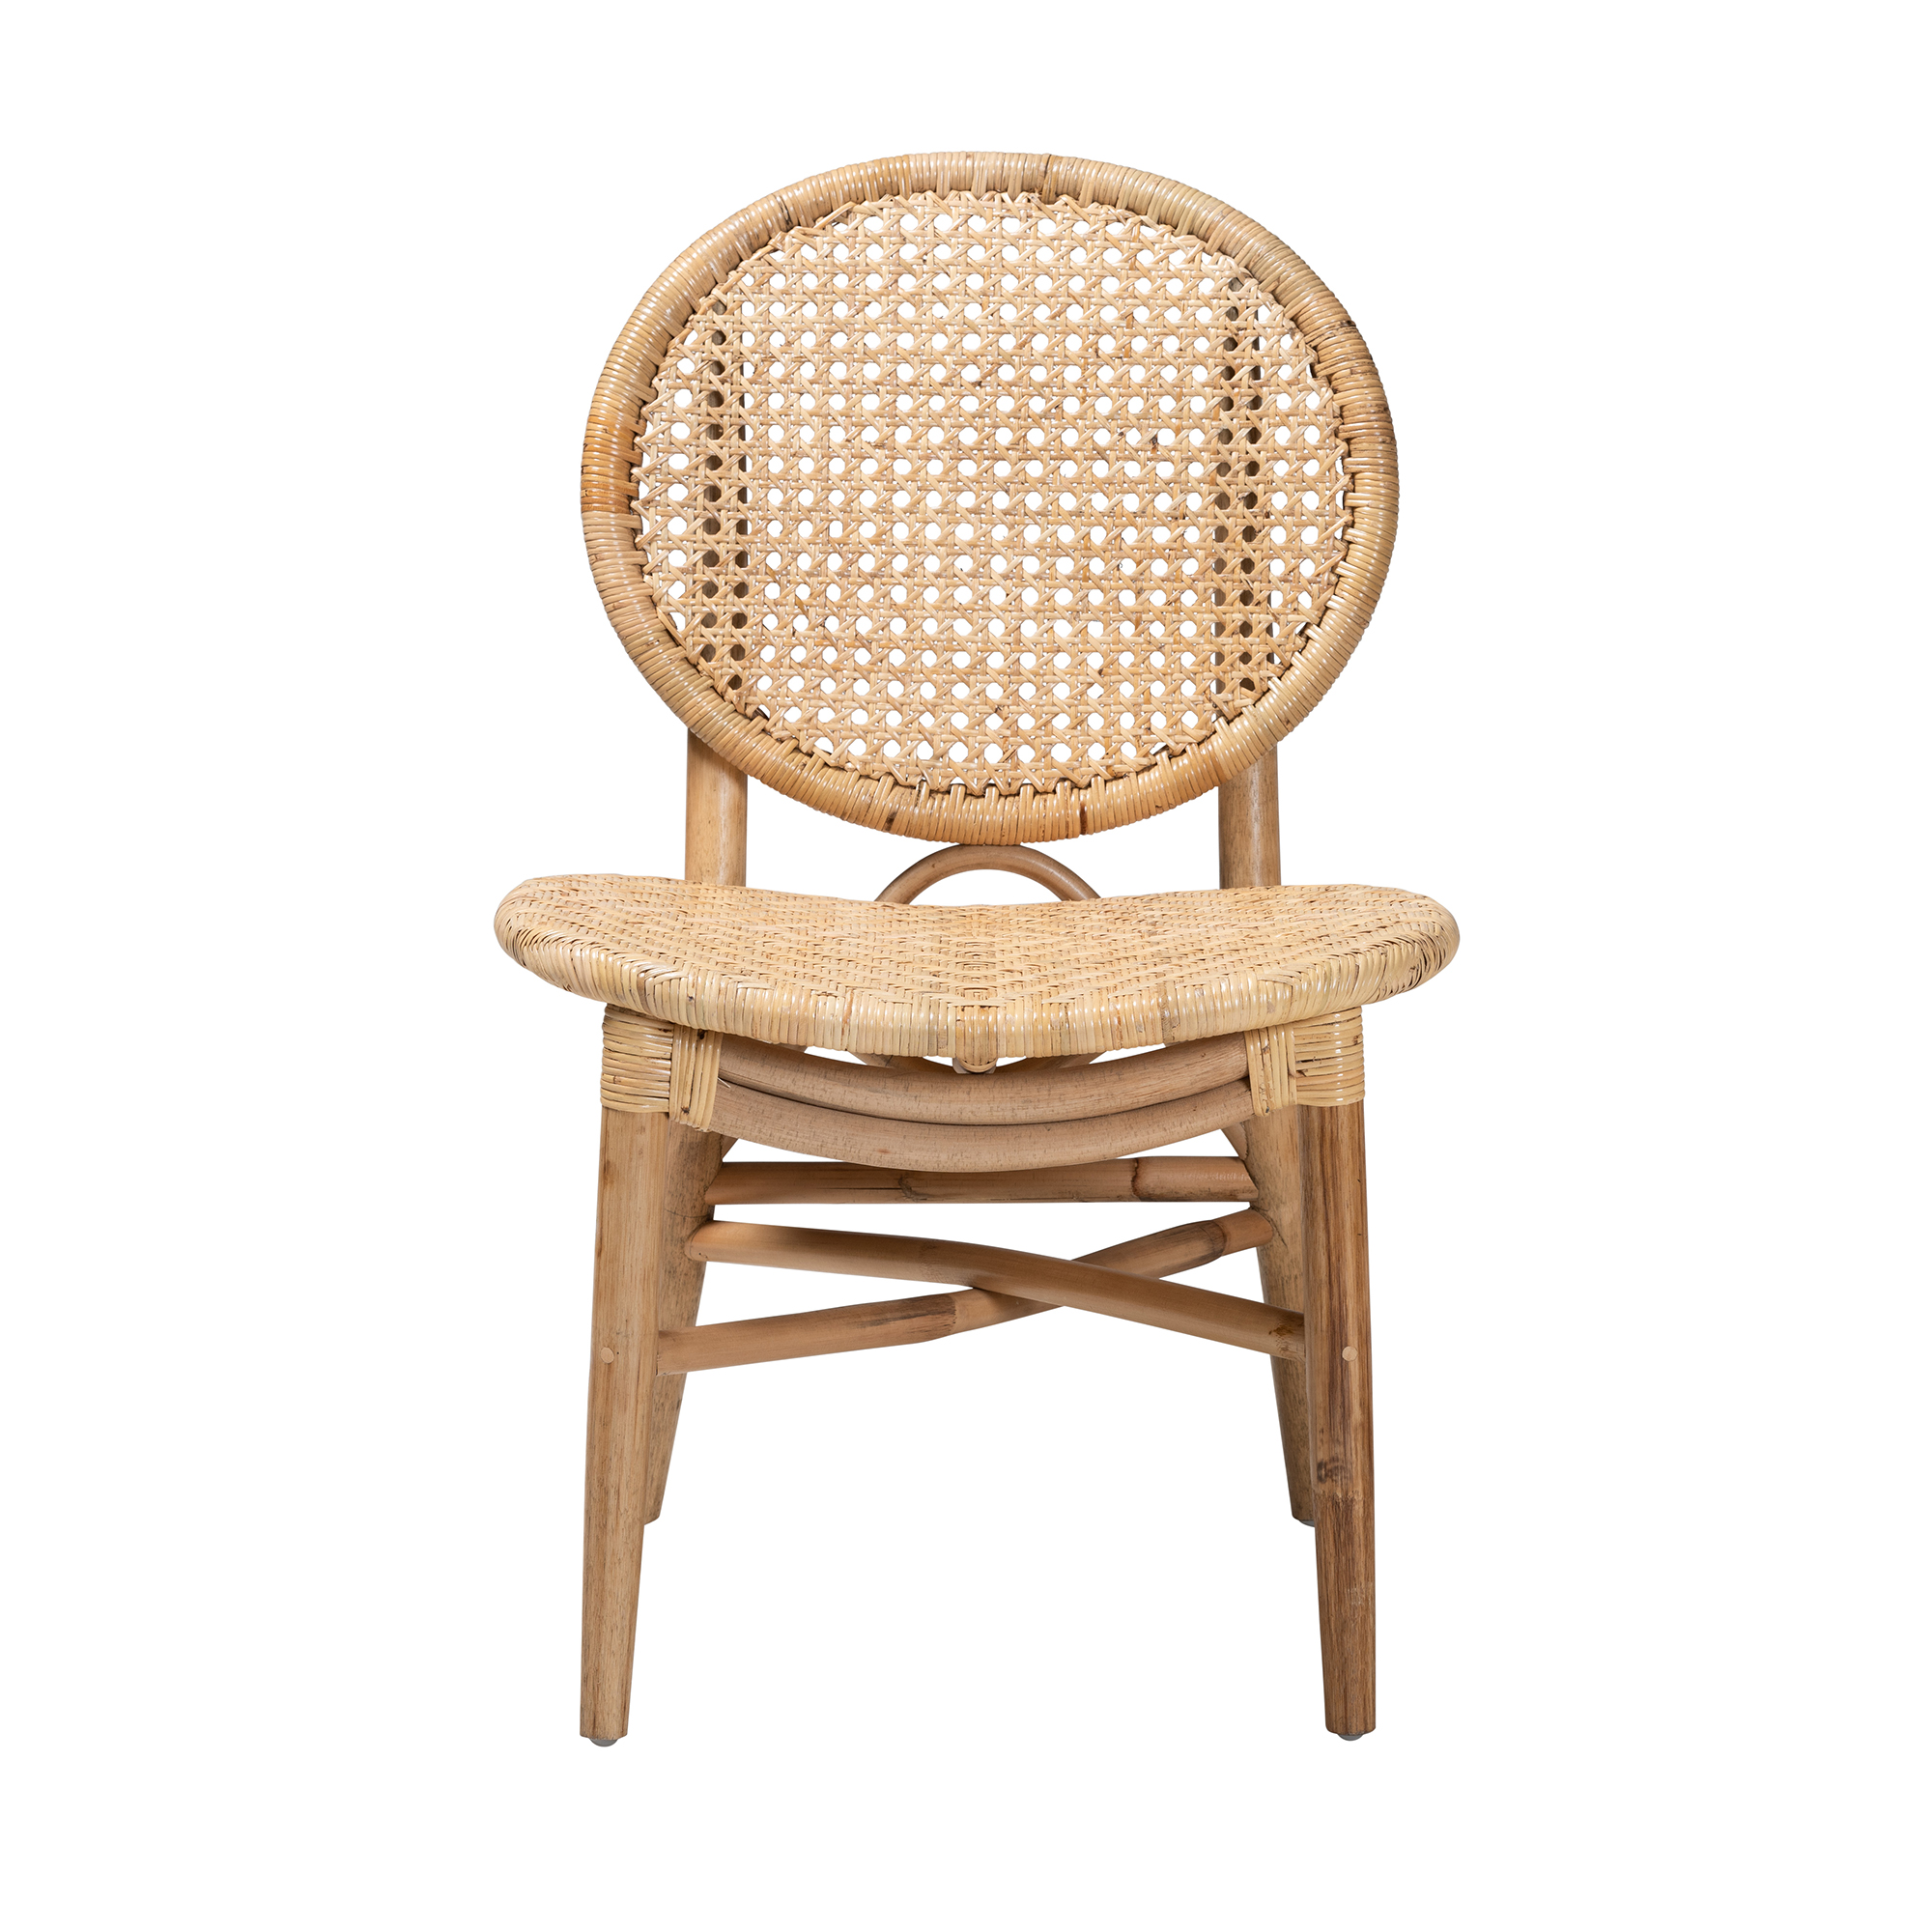 bali & pari Osaka Rattan BOHO Dining Chair, Natural Brown - image 3 of 9